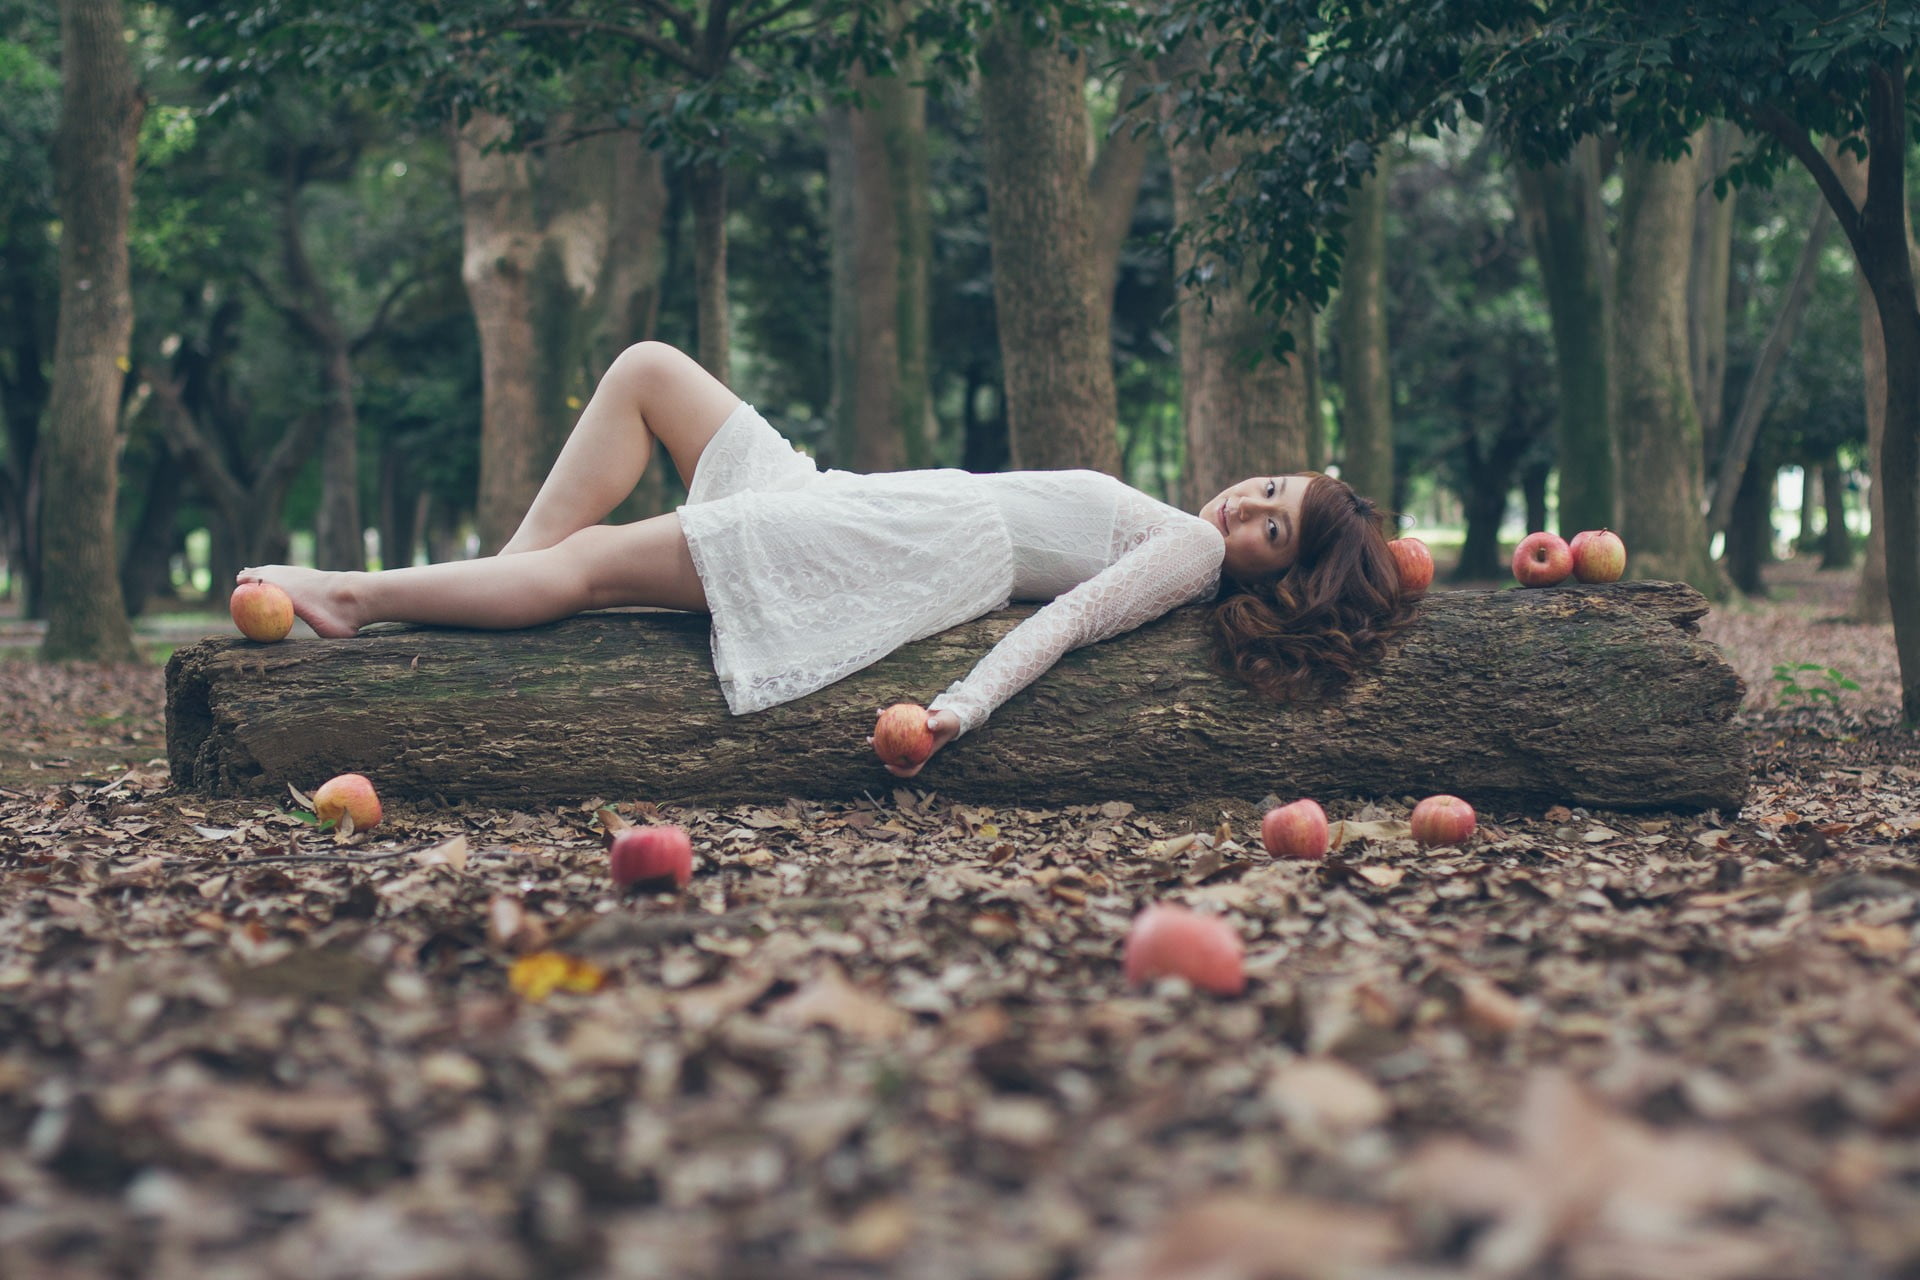 women, forest, lying down, apples, redhead, tree, full length